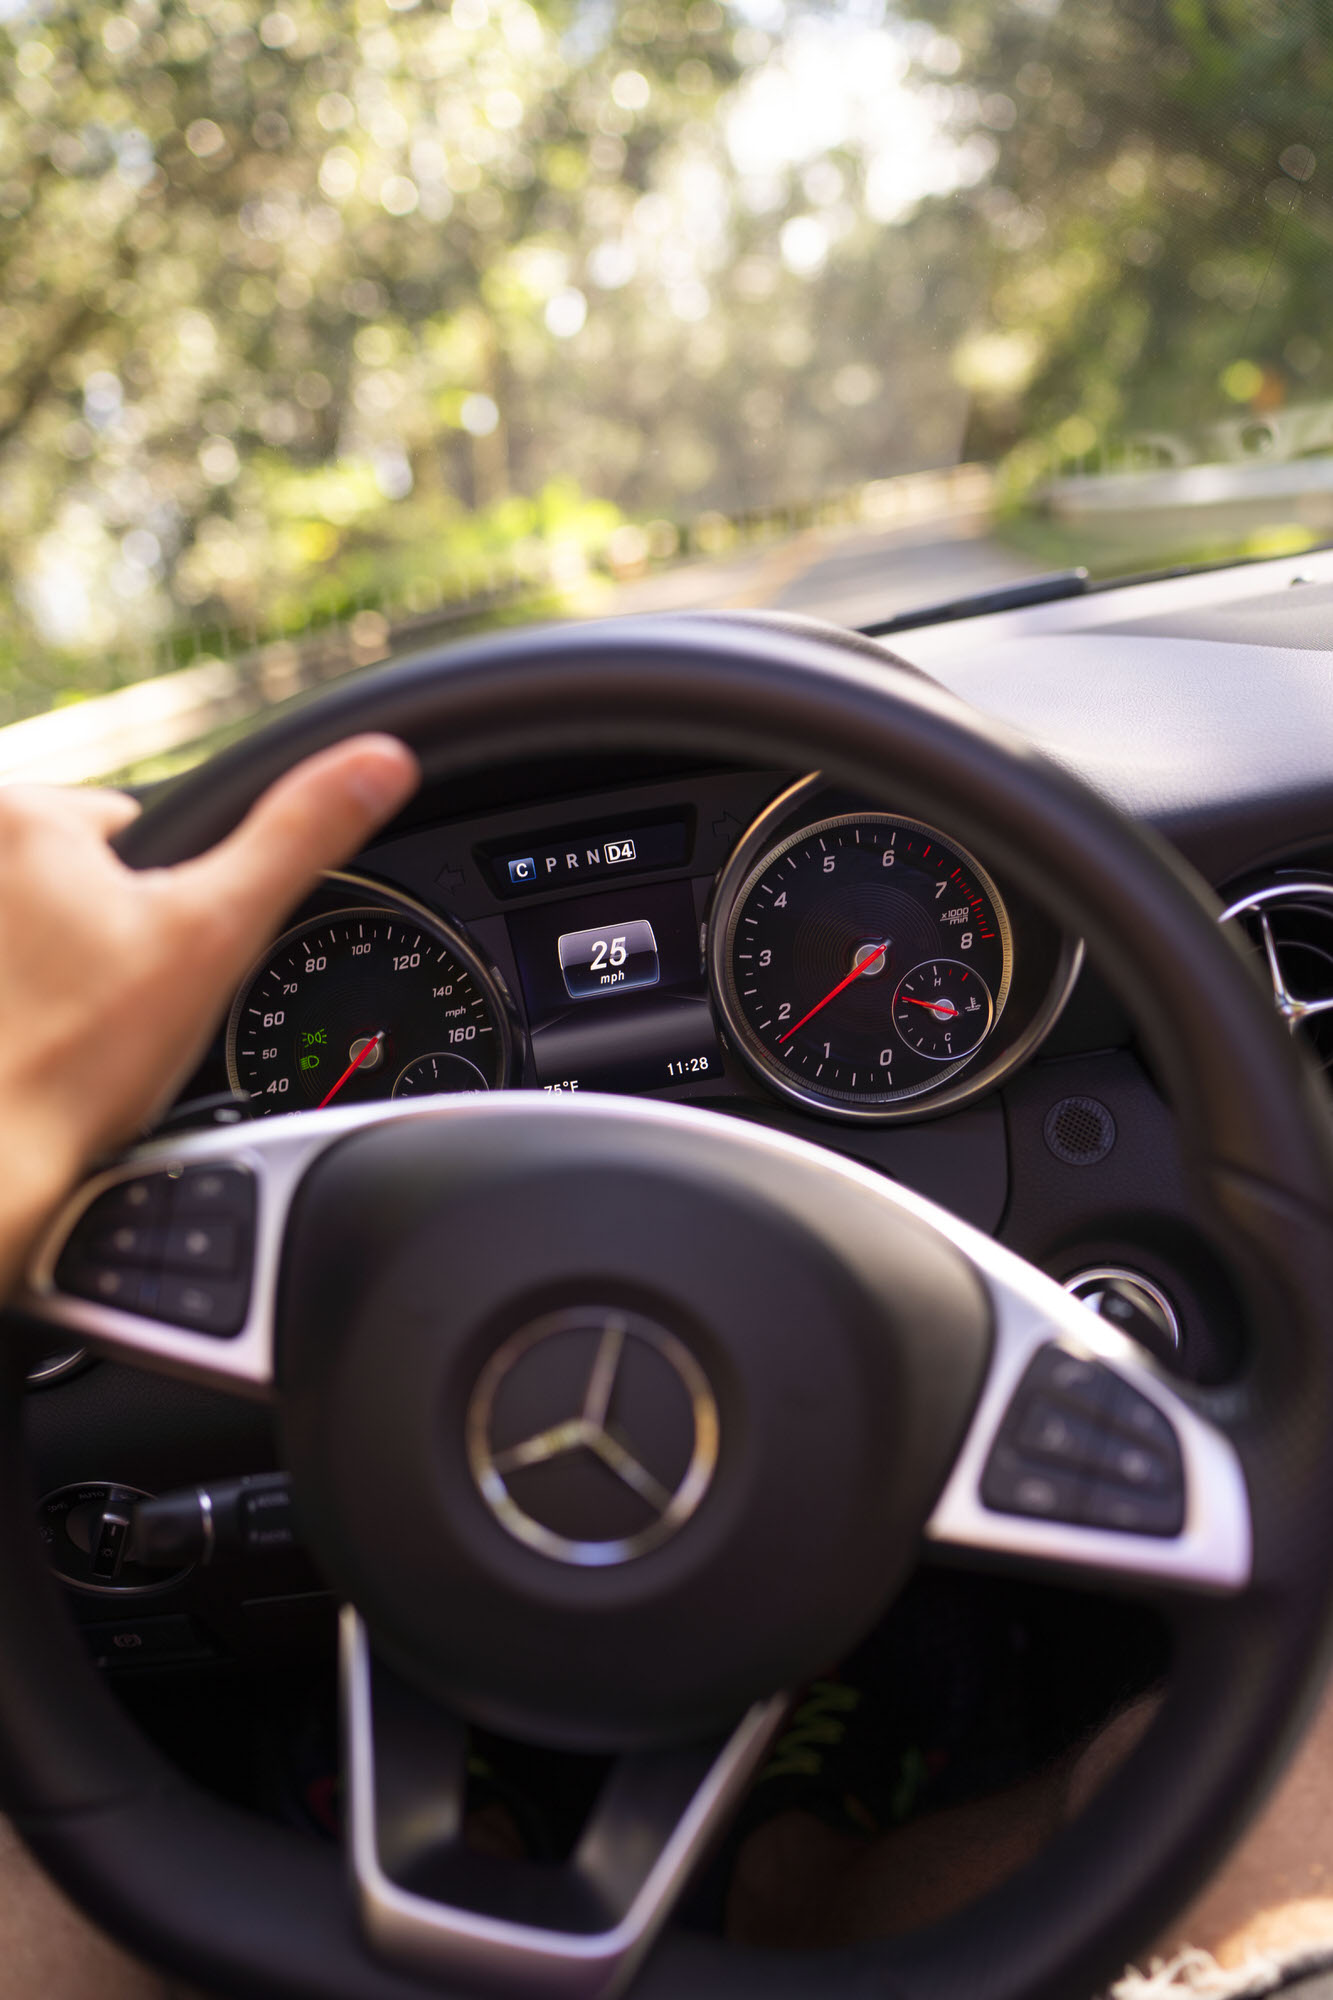 Speedometer of Mercedes-Benz SLC 300 driving through Maui, Hawaii